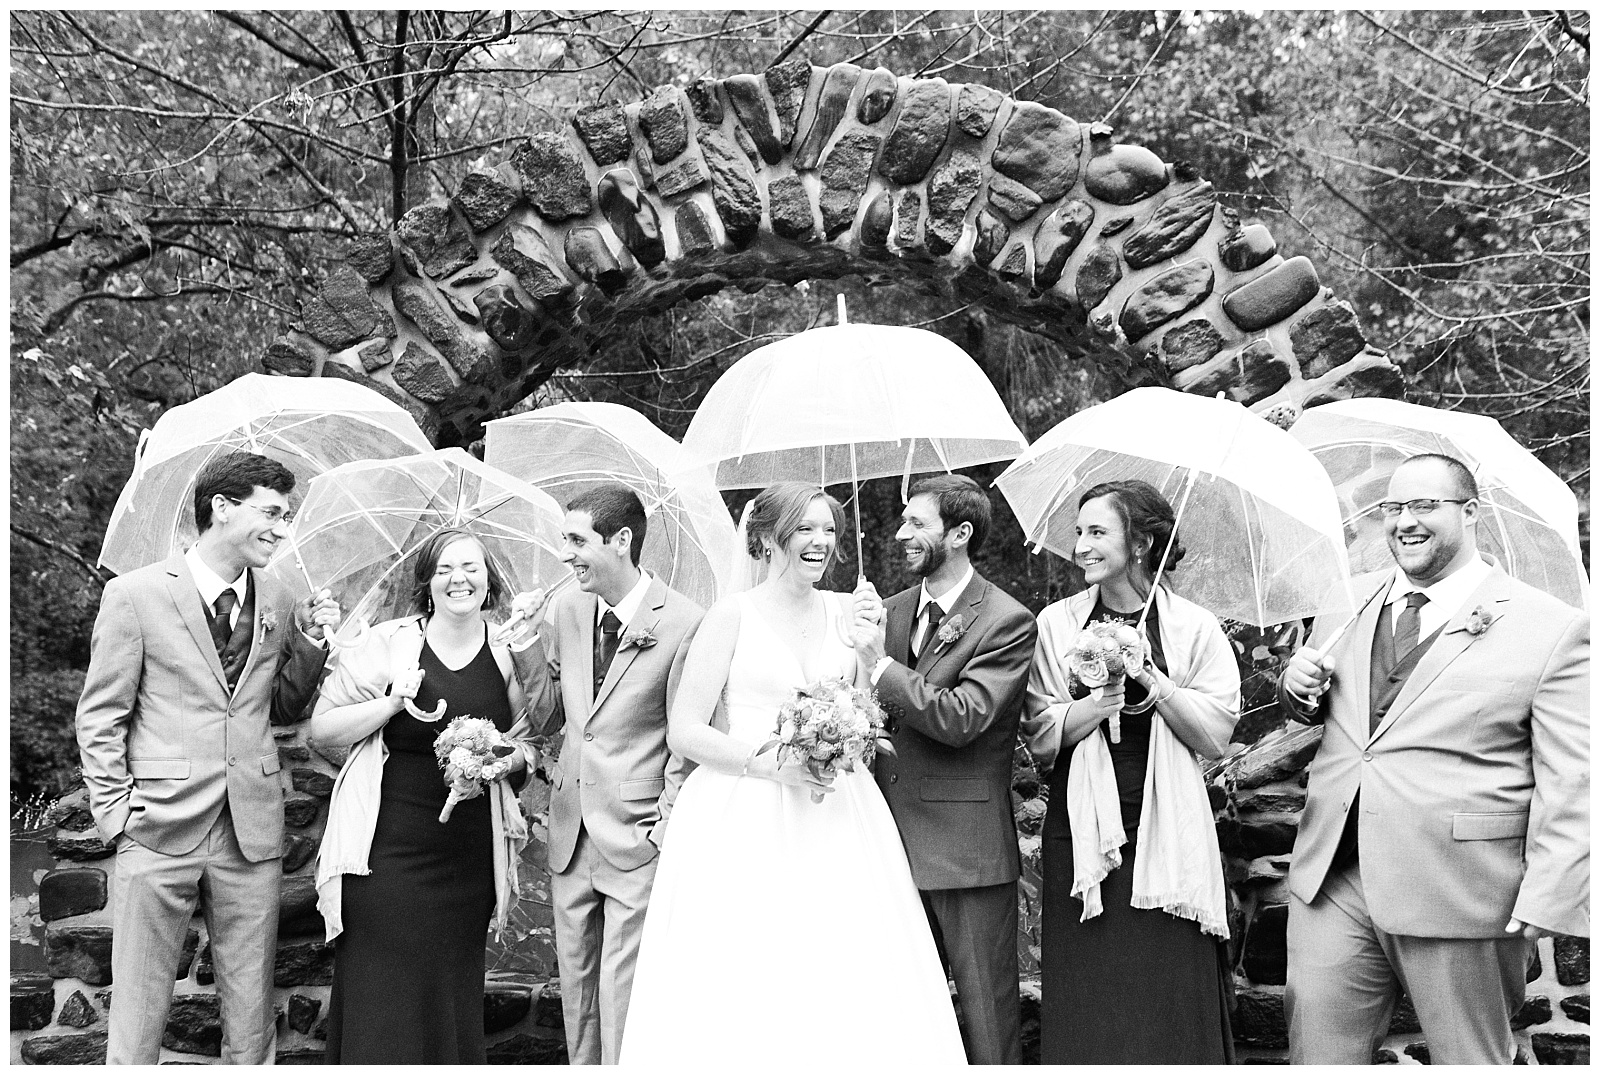 Bridal Party,Bridesmaids,Disney Wedding,Fall,Groomsmen,Kings Mills,Light and Airy,NJ wedding photographer,PA,Pennsylvania,Rainy Day,Rainy Wedding,Umbrellas,Wedding Party,Wedding Photographer,